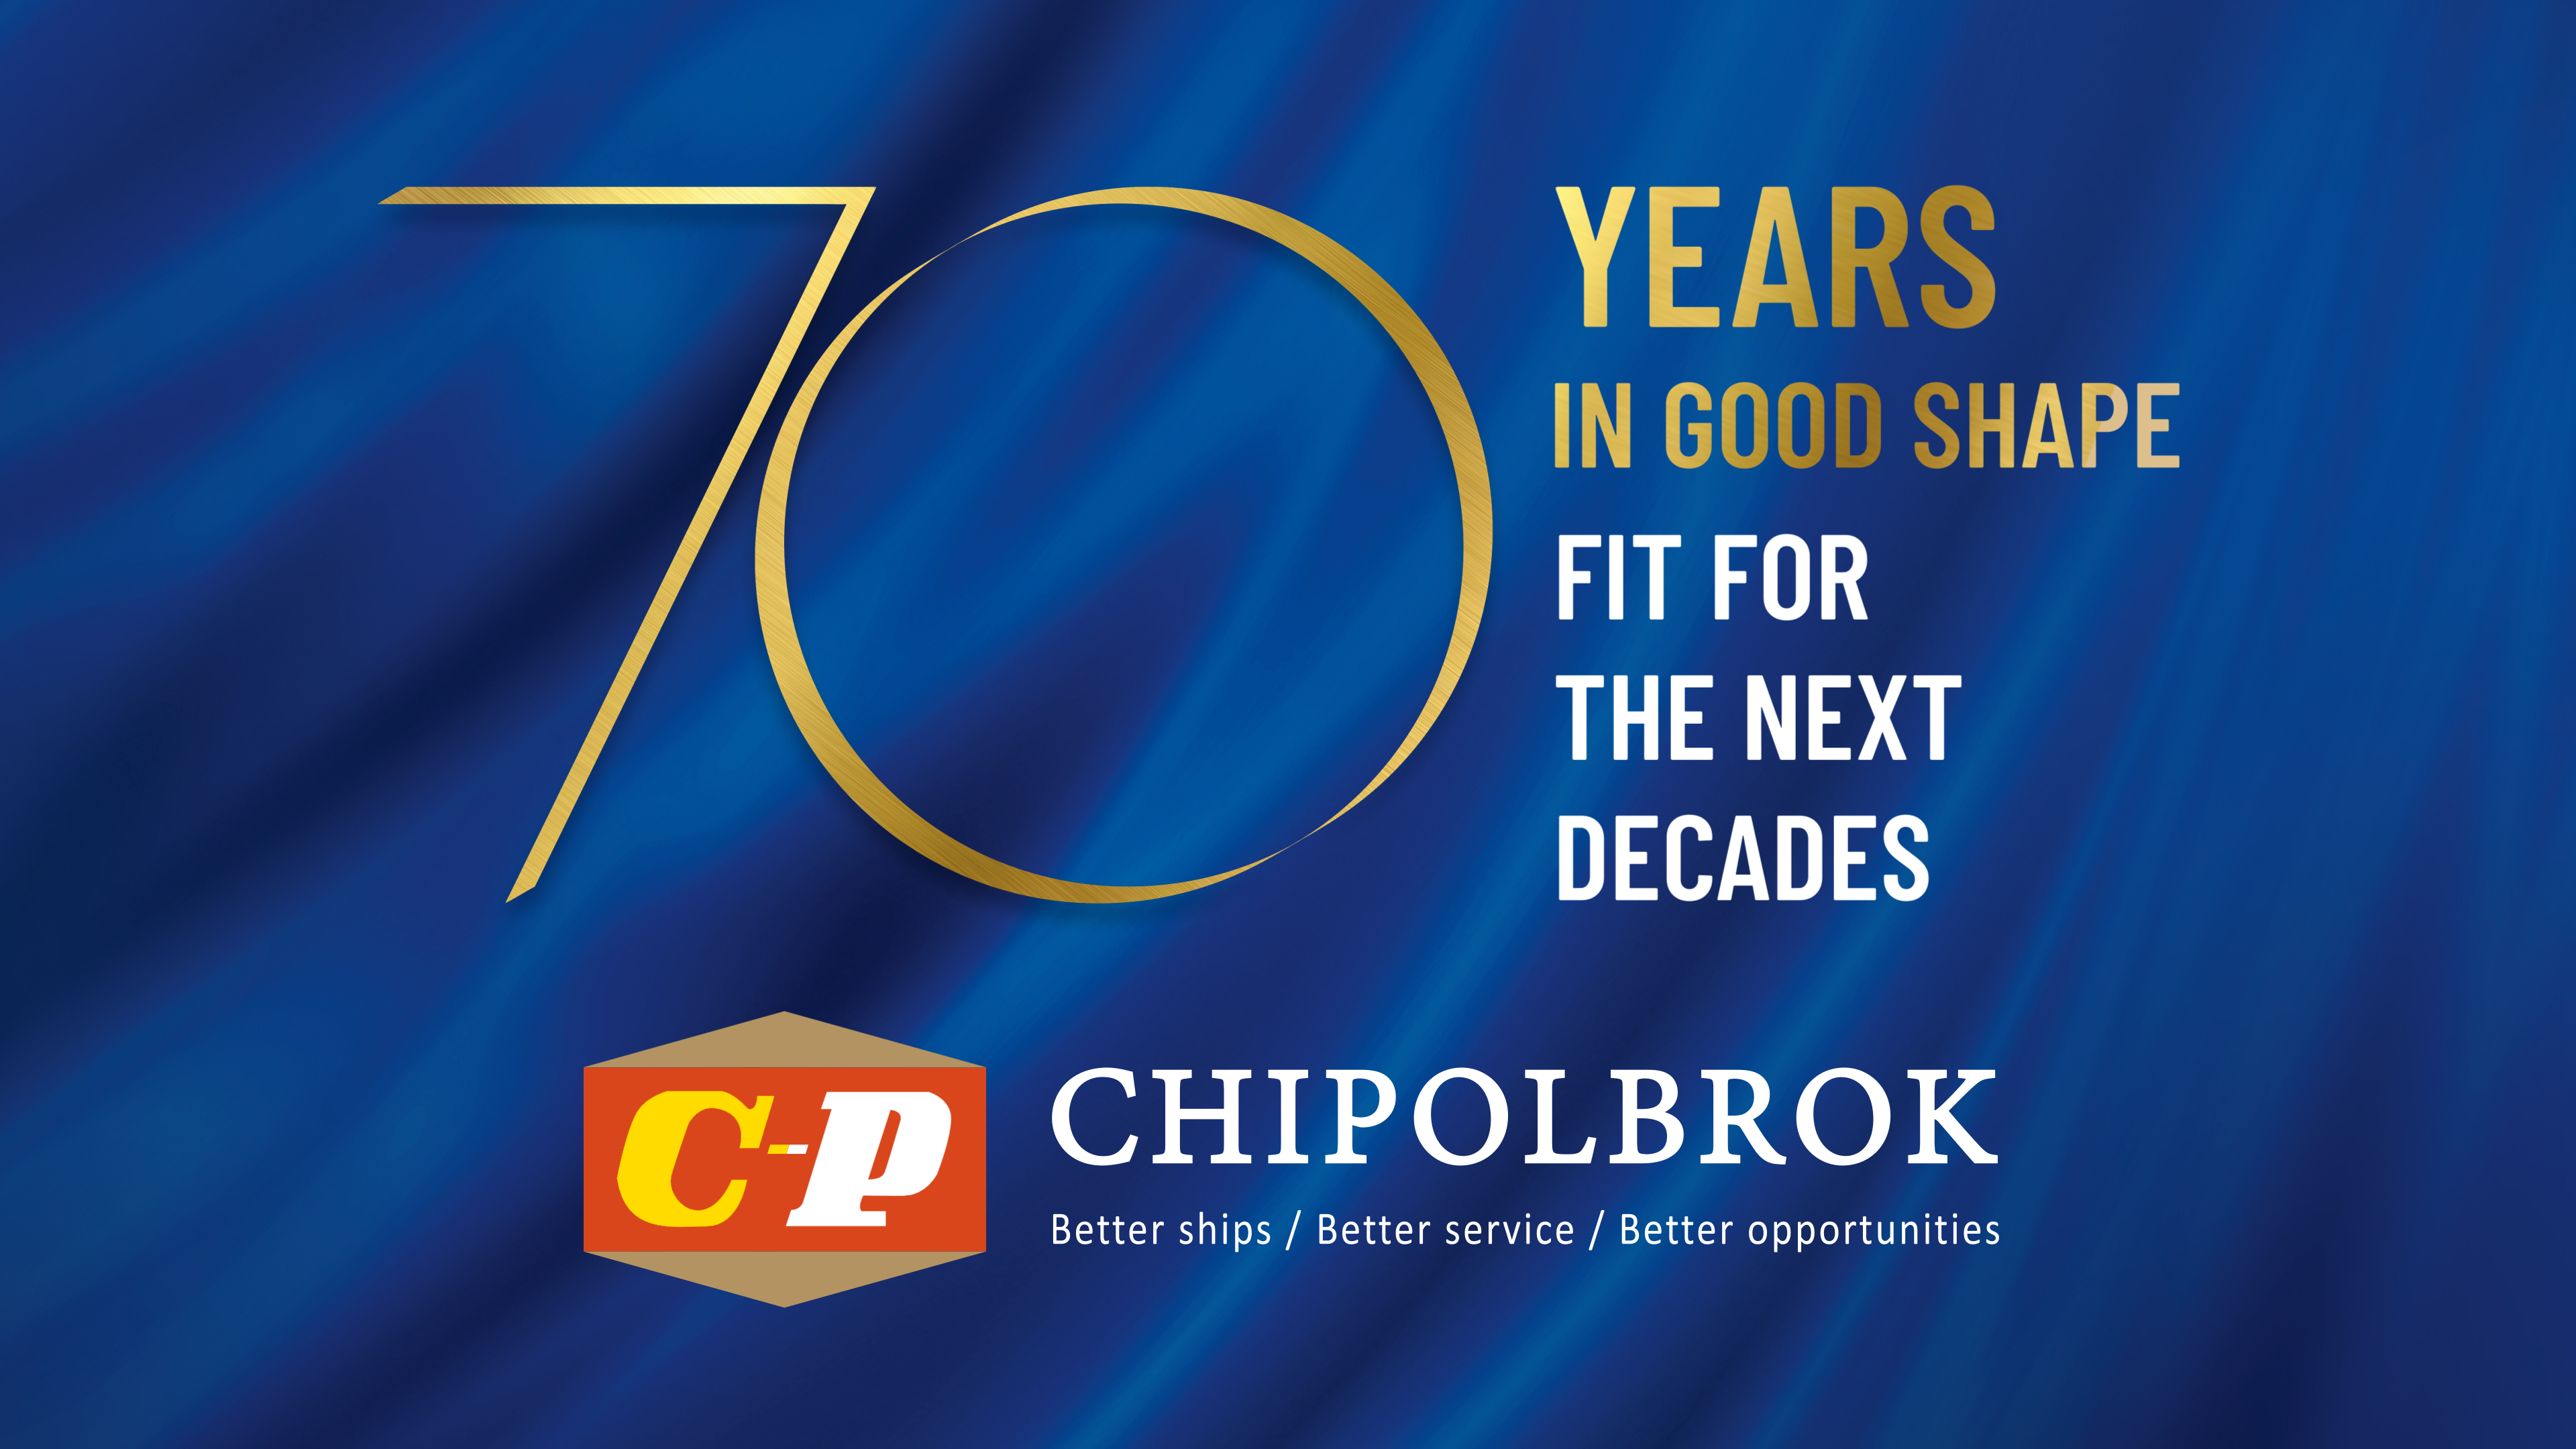 Chipolbrok celebrates 70th anniversary today - MarinePoland.com